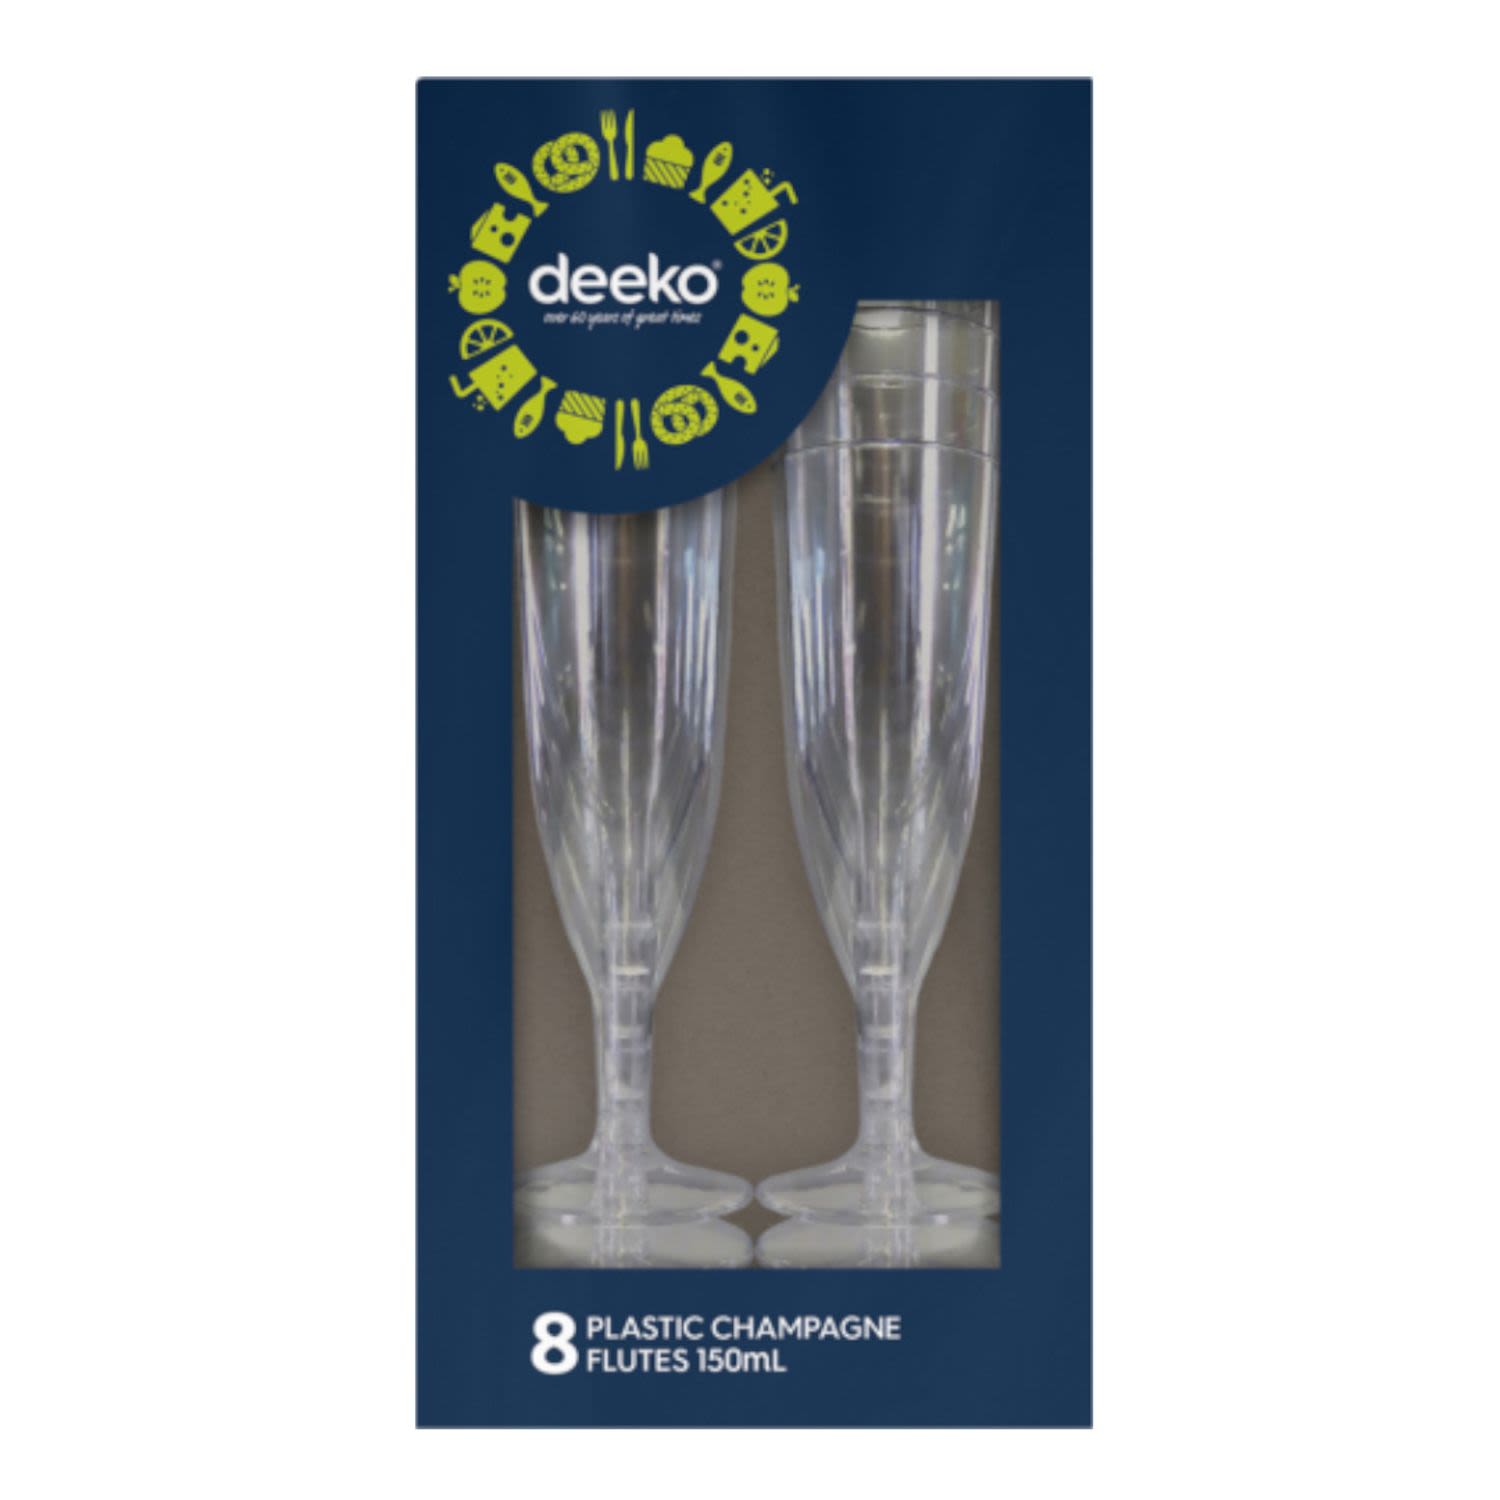 Deeko Plastic Champagne Flute 150ml, 8 Each